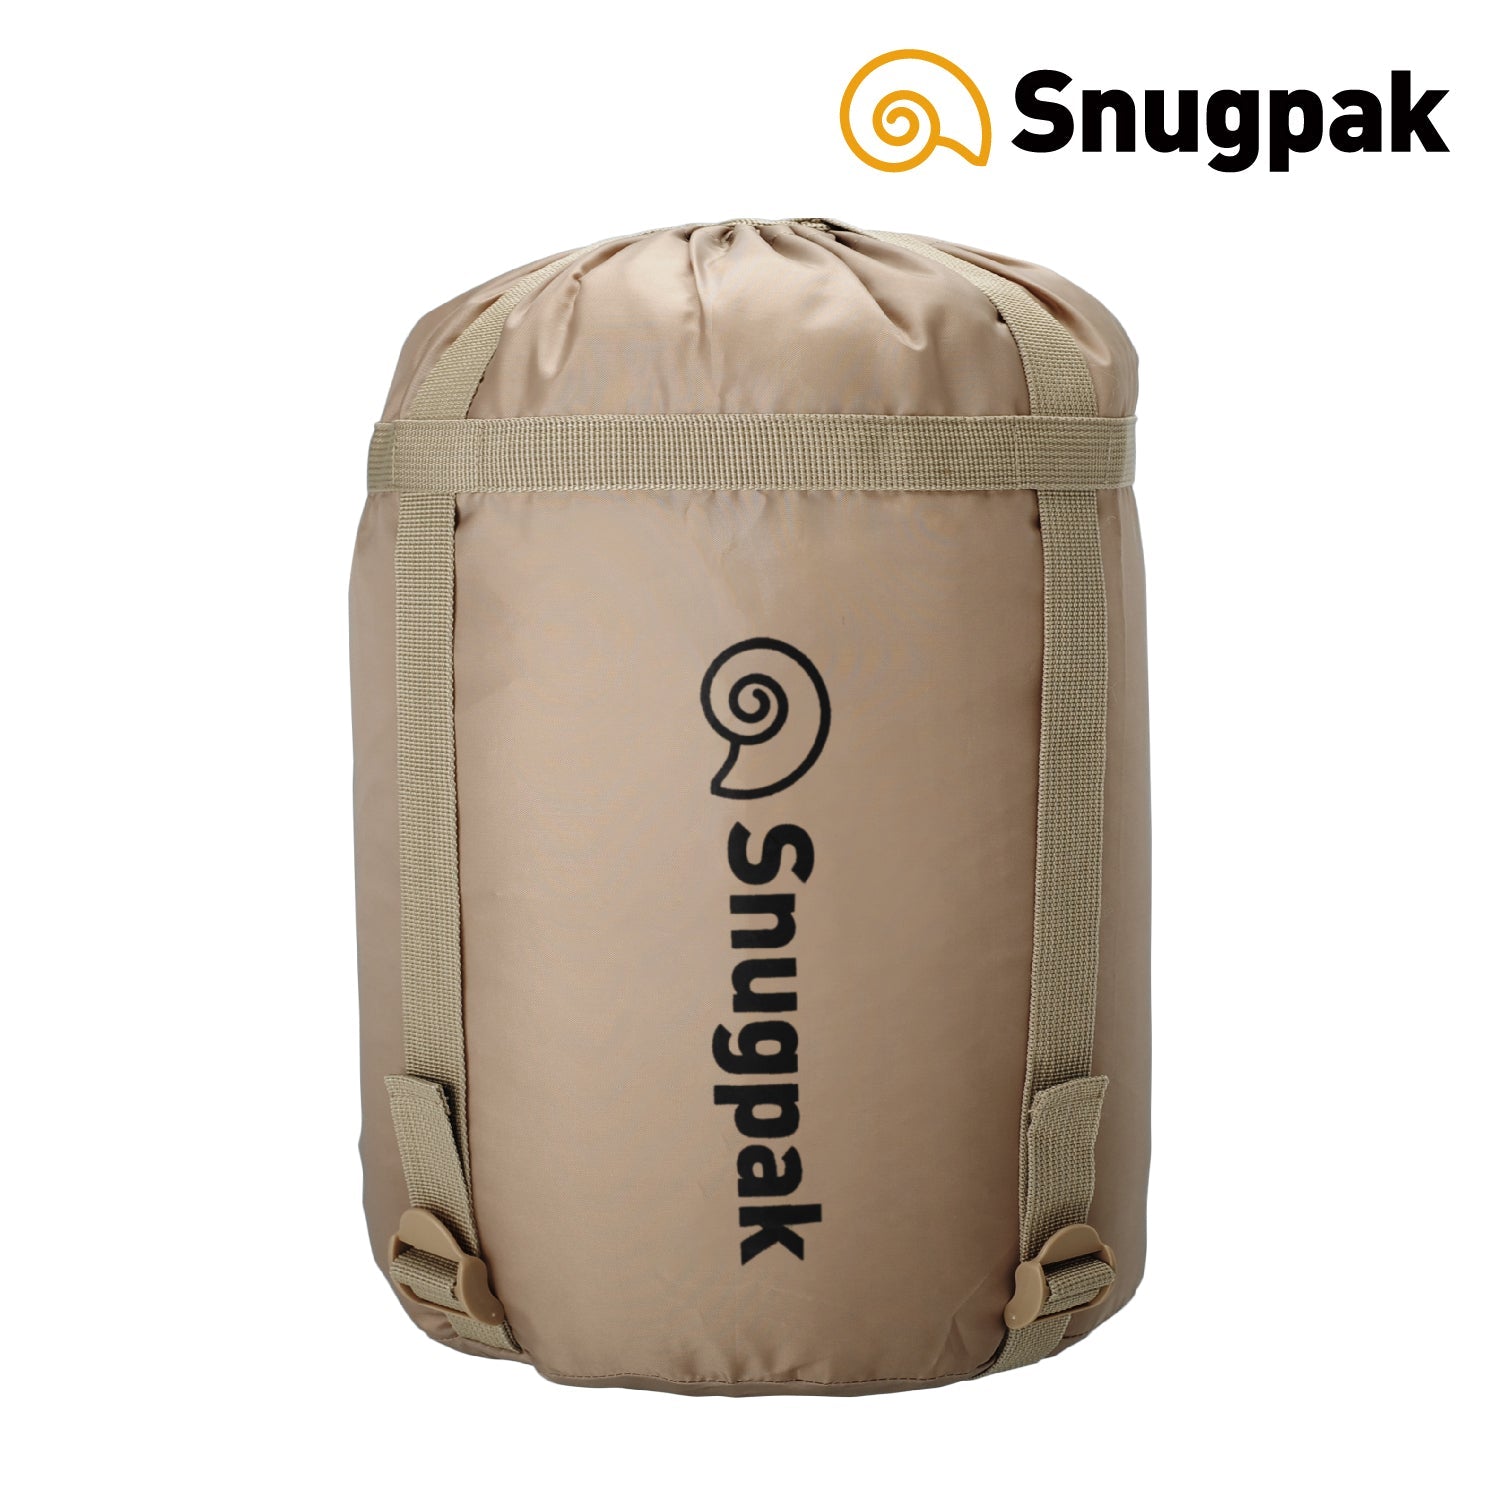 Snugpak(スナグパック) コンプレッションサック ラージサイズ – ビッグウイングオンラインストア